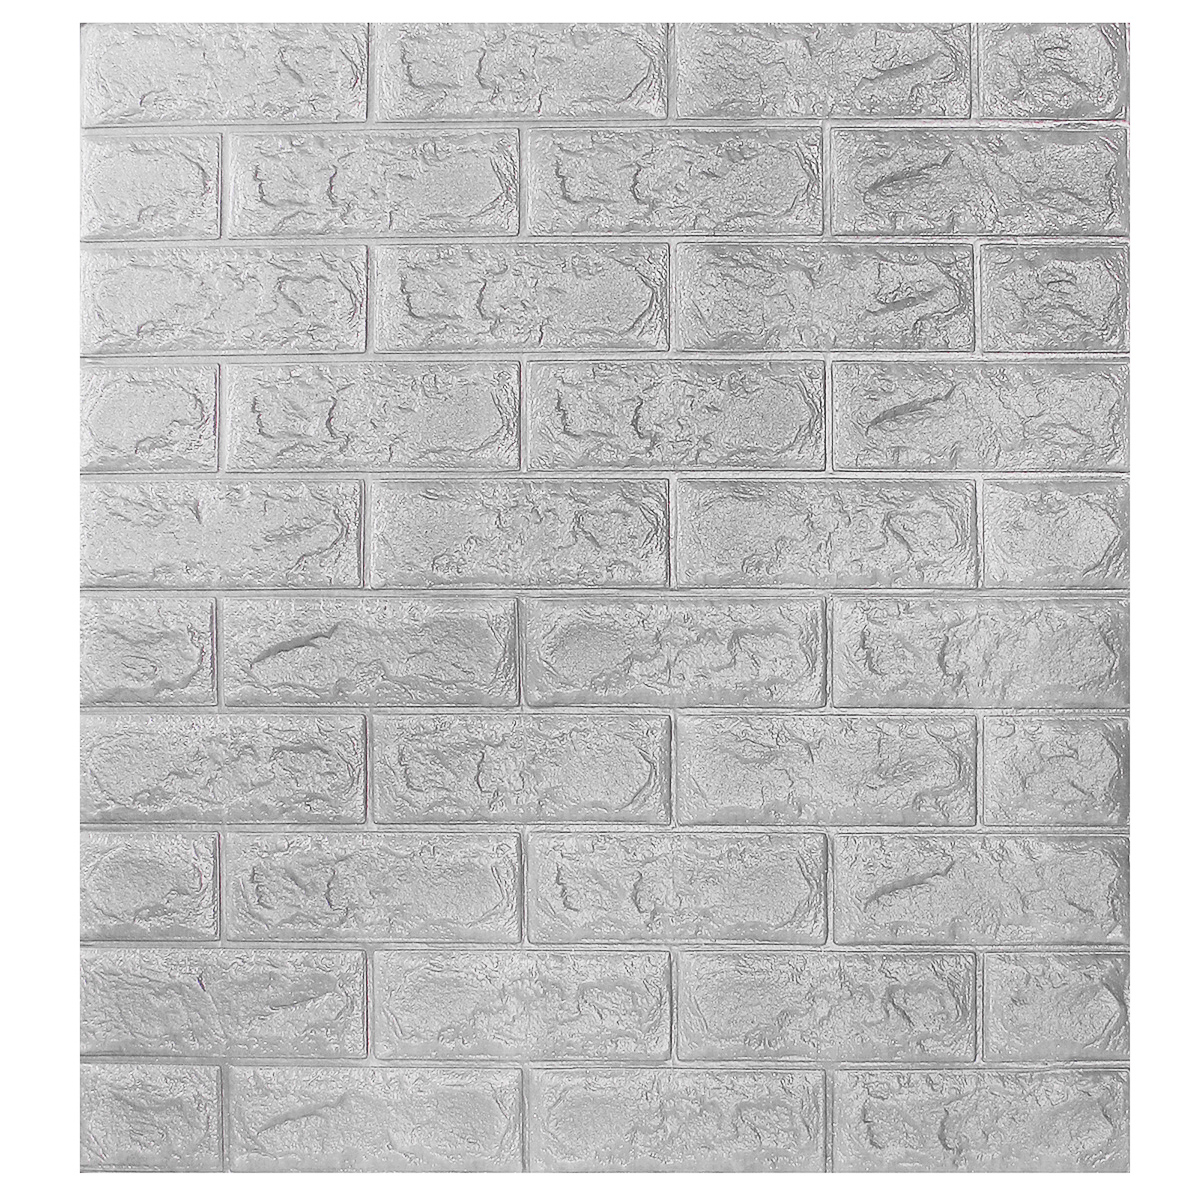 3D-Brick-Pattern-Wallpaper-Bedroom-Living-Room-Modern-Wall-Sticker-TV-Background-Decor-1195902-2